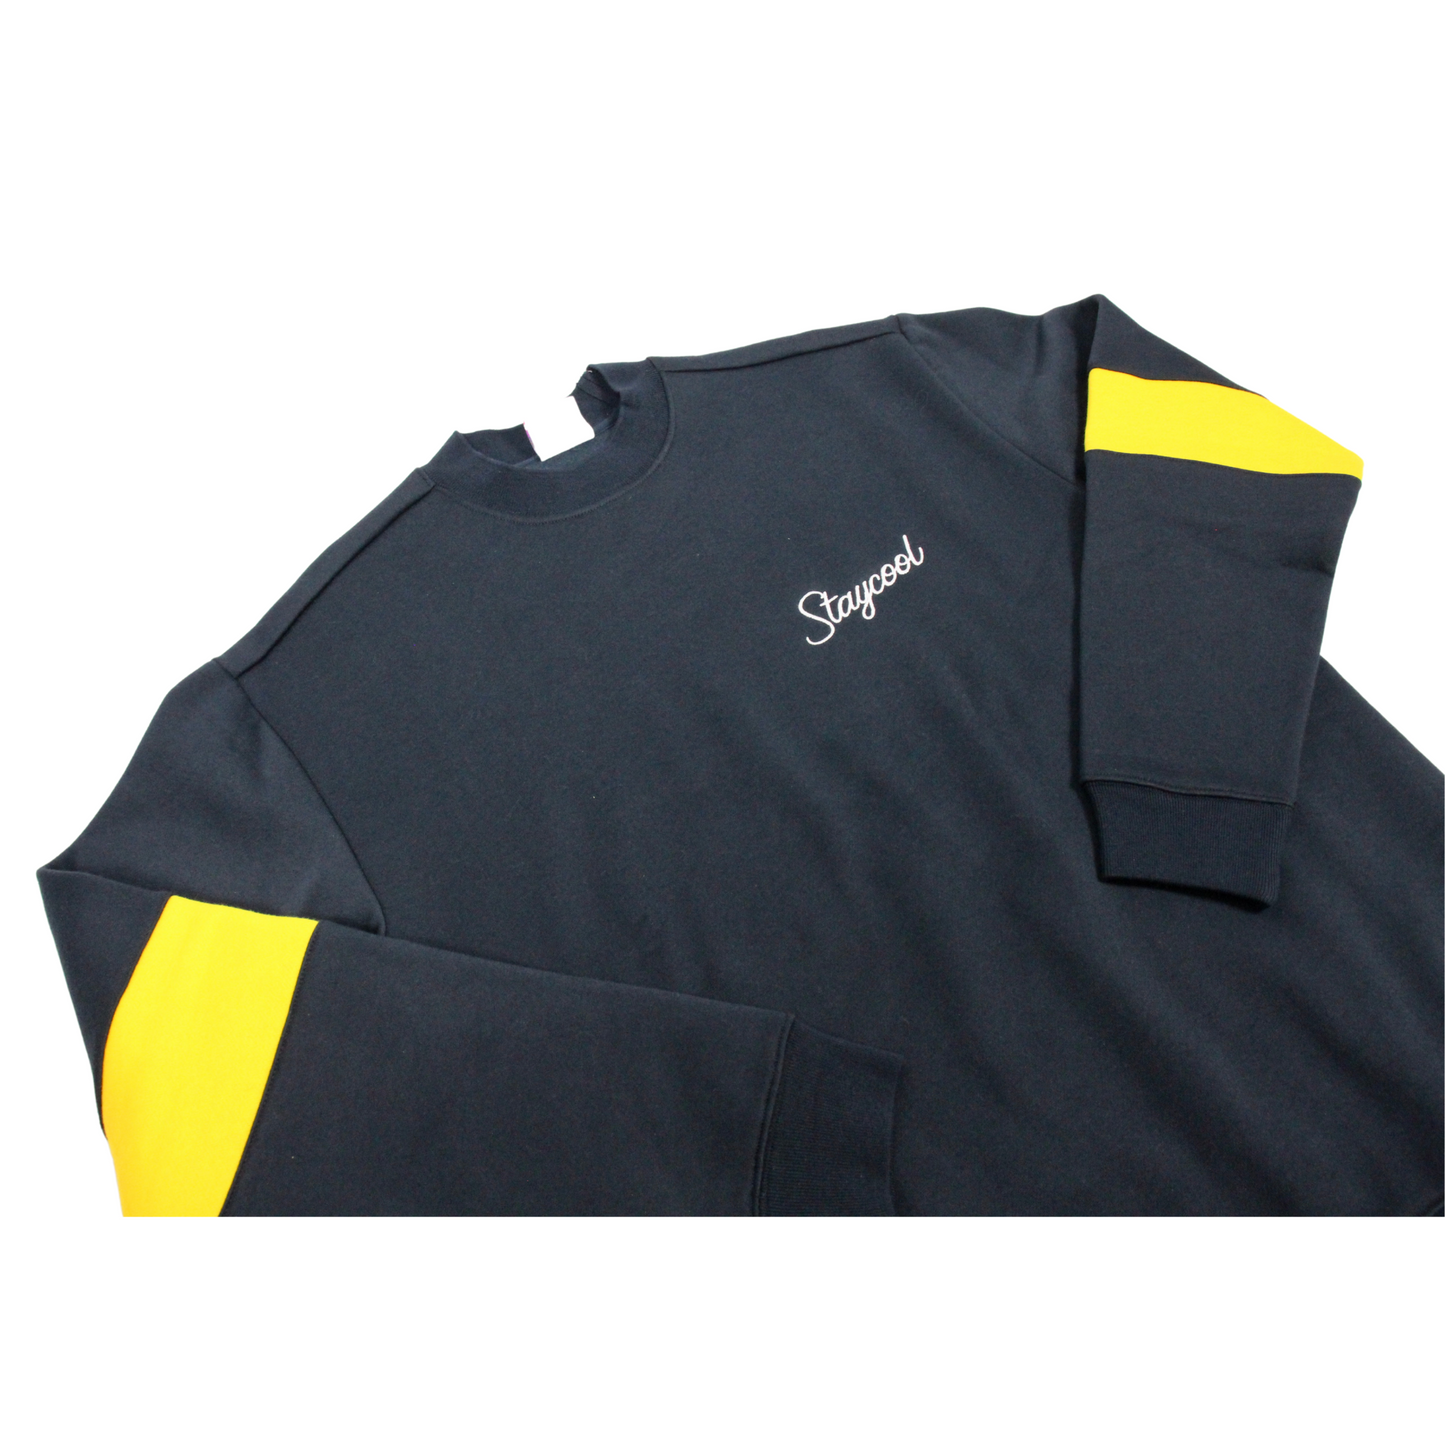 Staycoolnyc Collegiate Sweatshirt (Navy/Yellow)